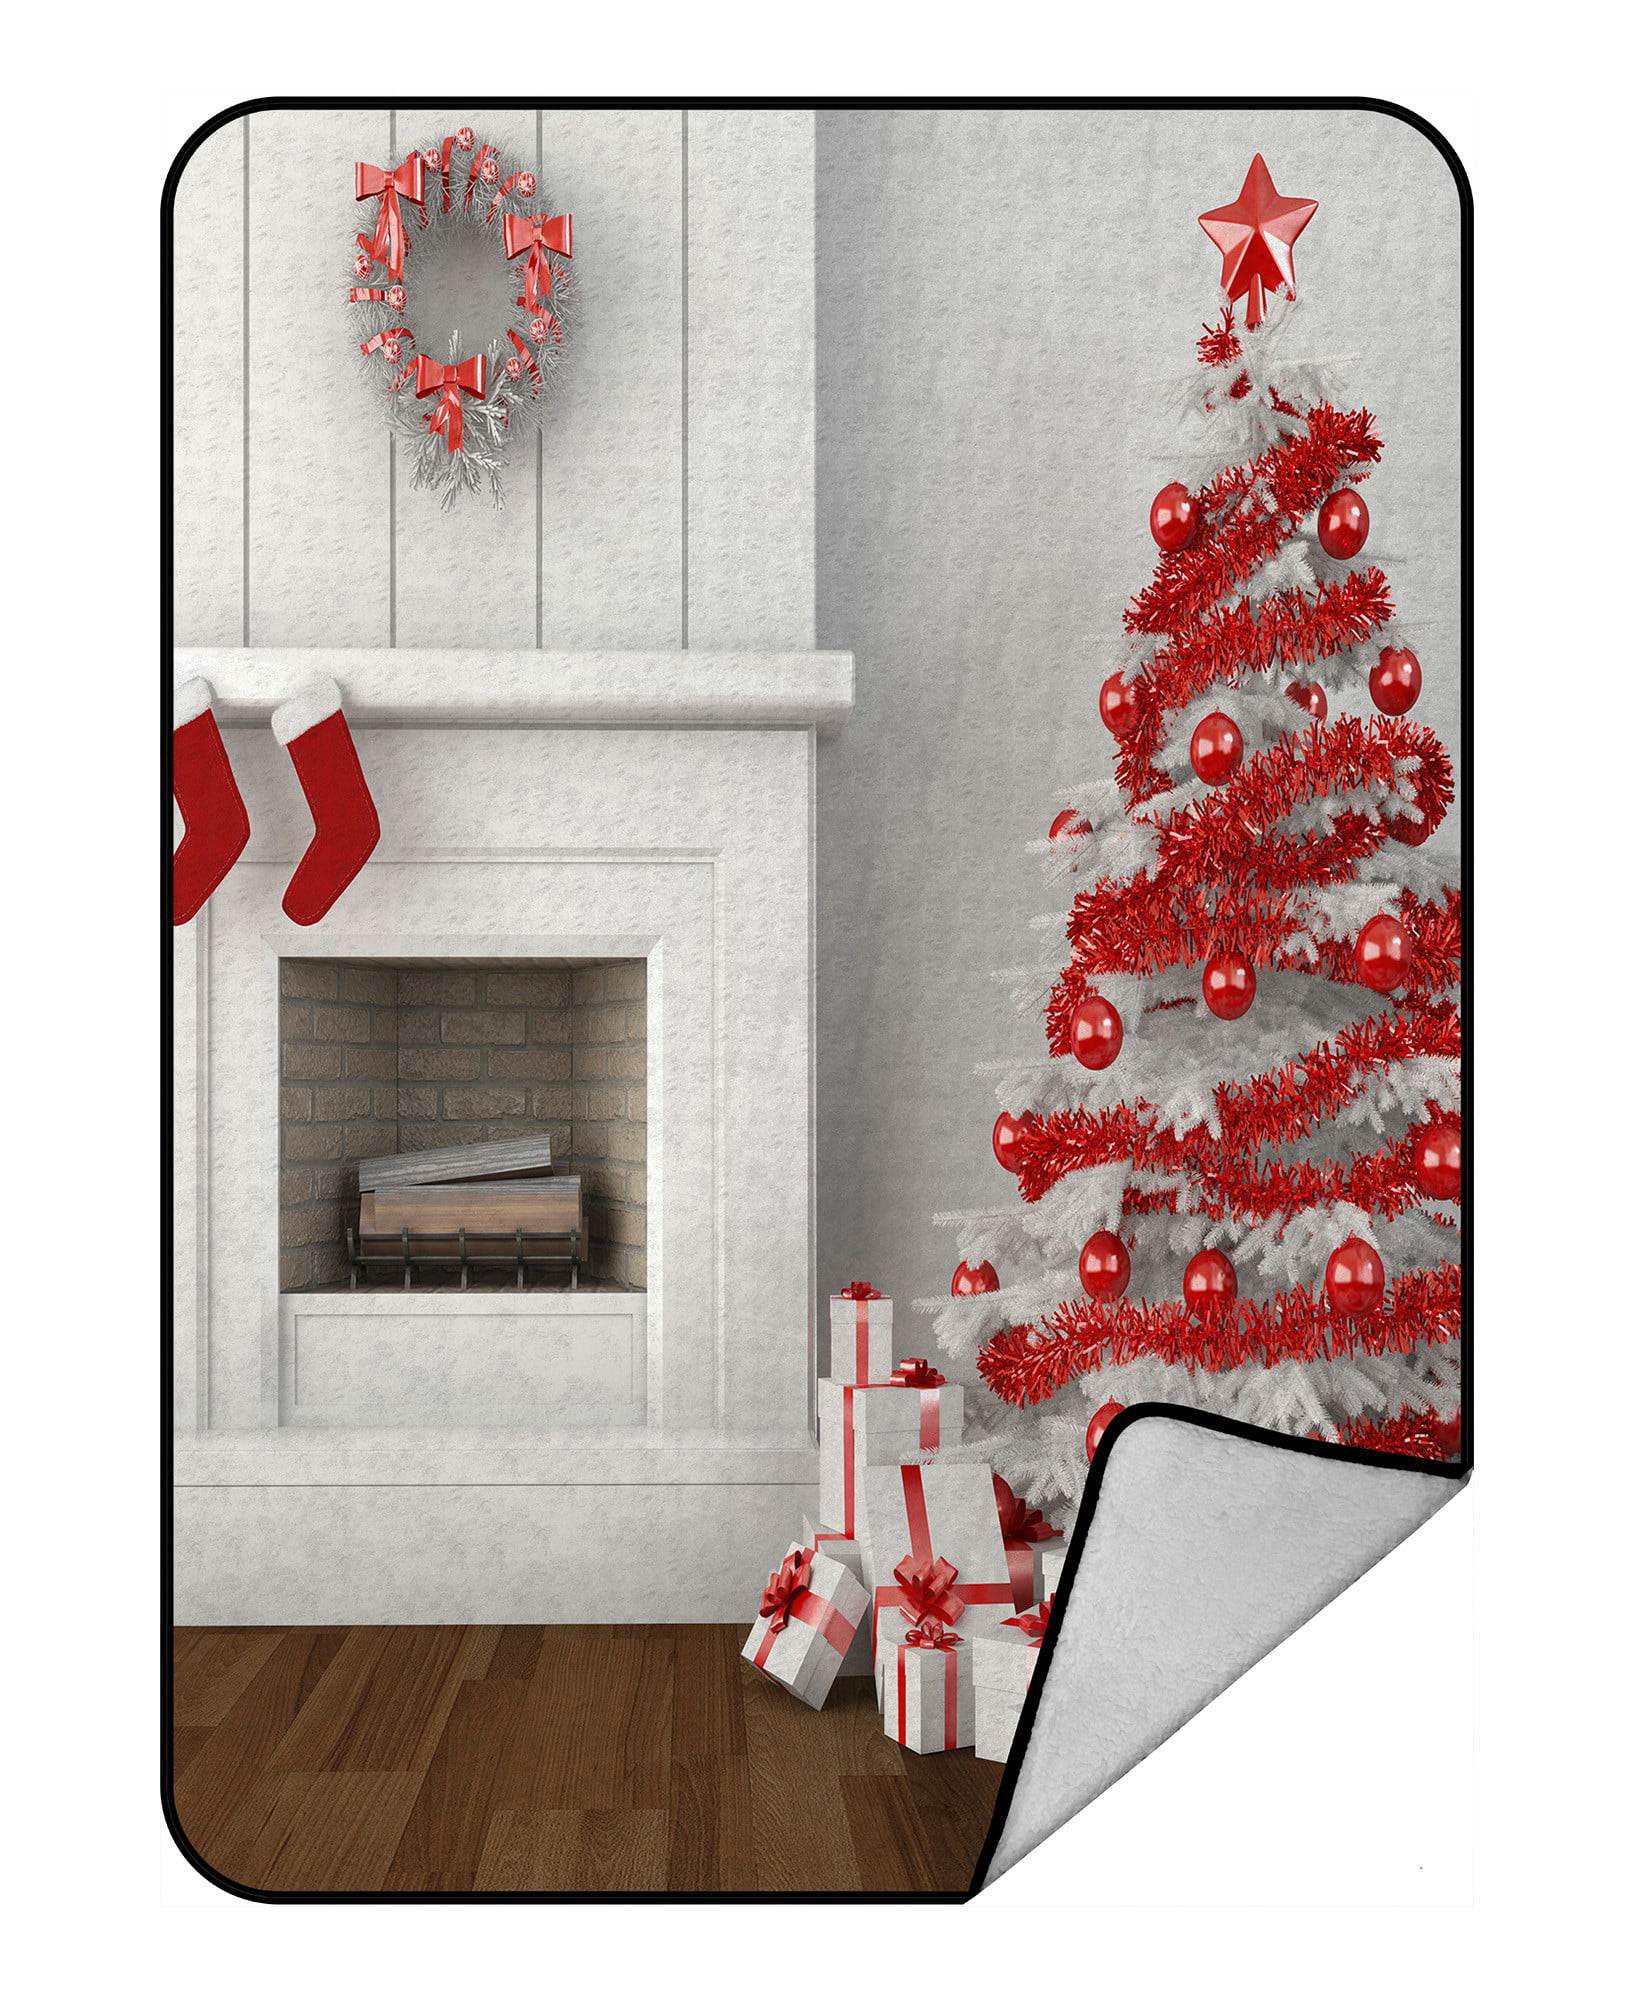 ECZJNT Fireplace Christmas Tree Throw Blanket Fleece Blankets Plush